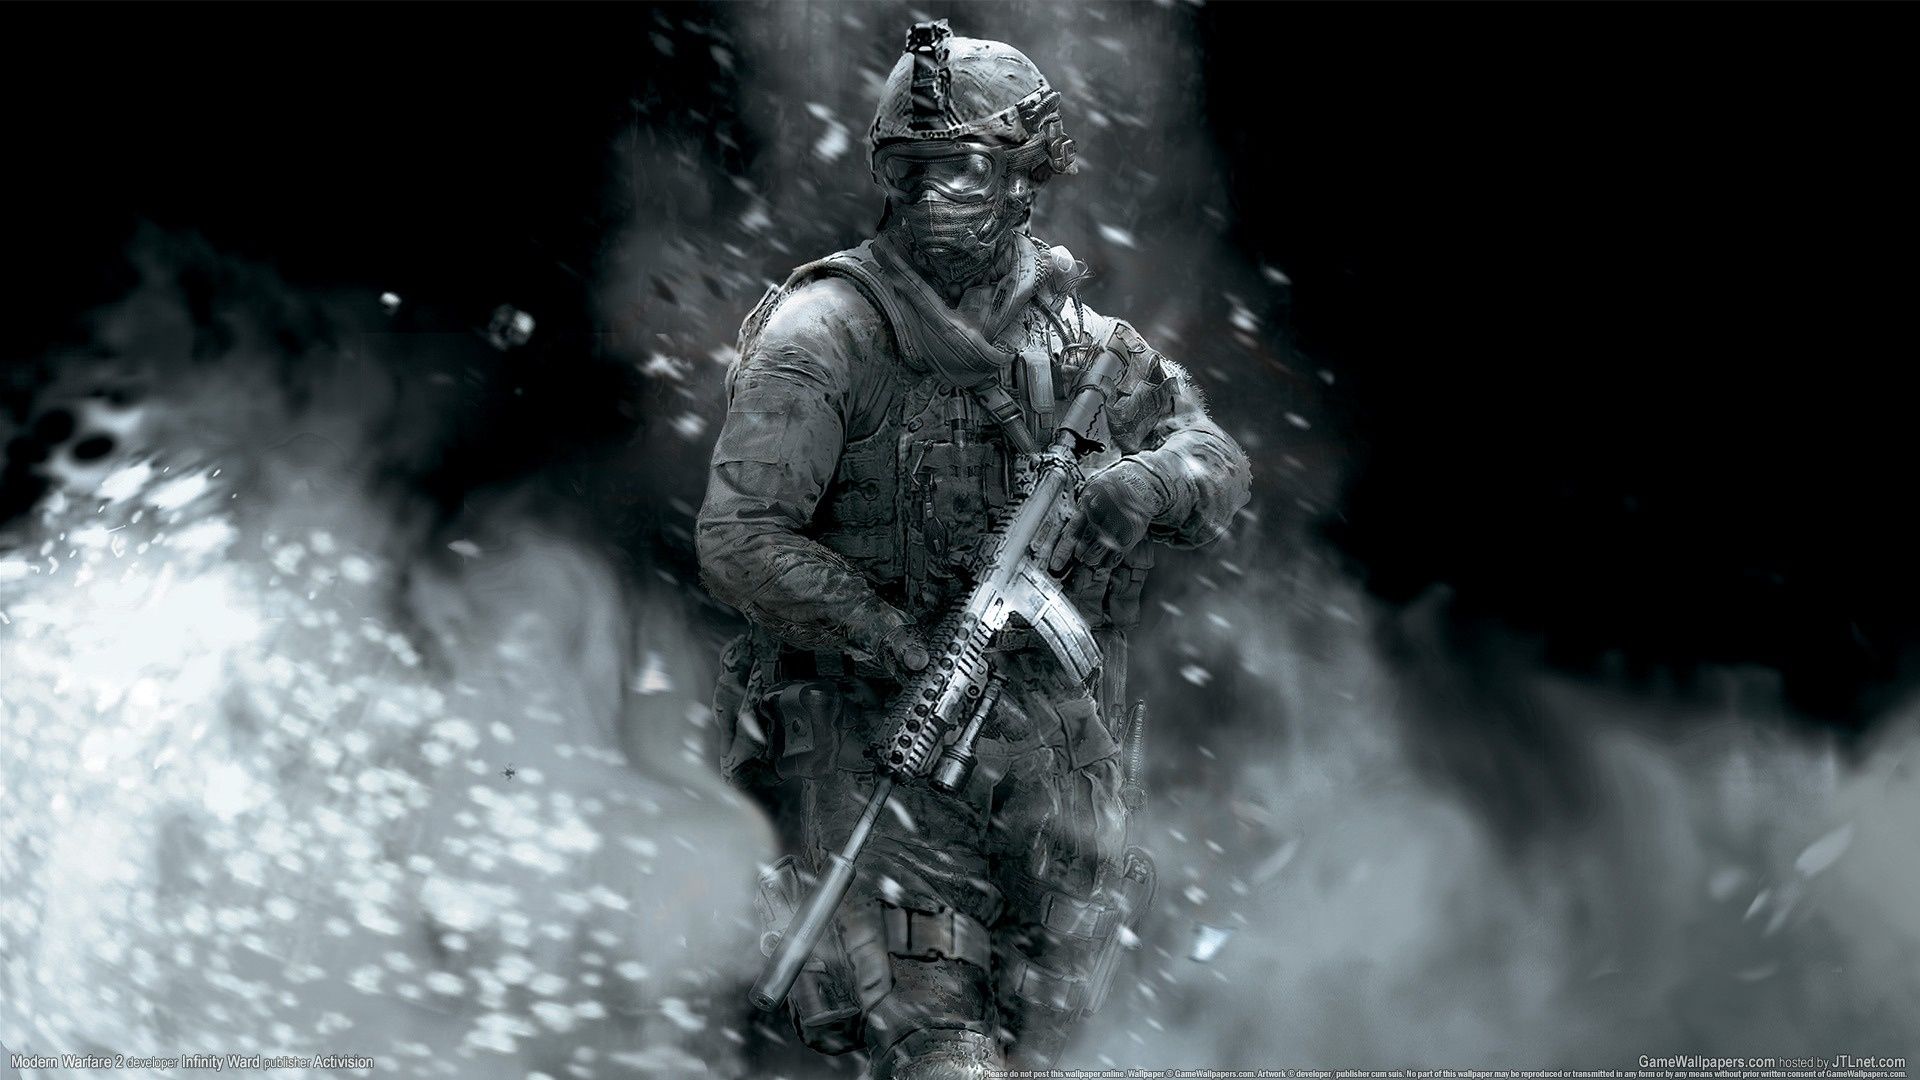 Wallpaper Call of Duty: Modern Warfare 2 HD 1920x1080 Full HD 2K Picture, Image